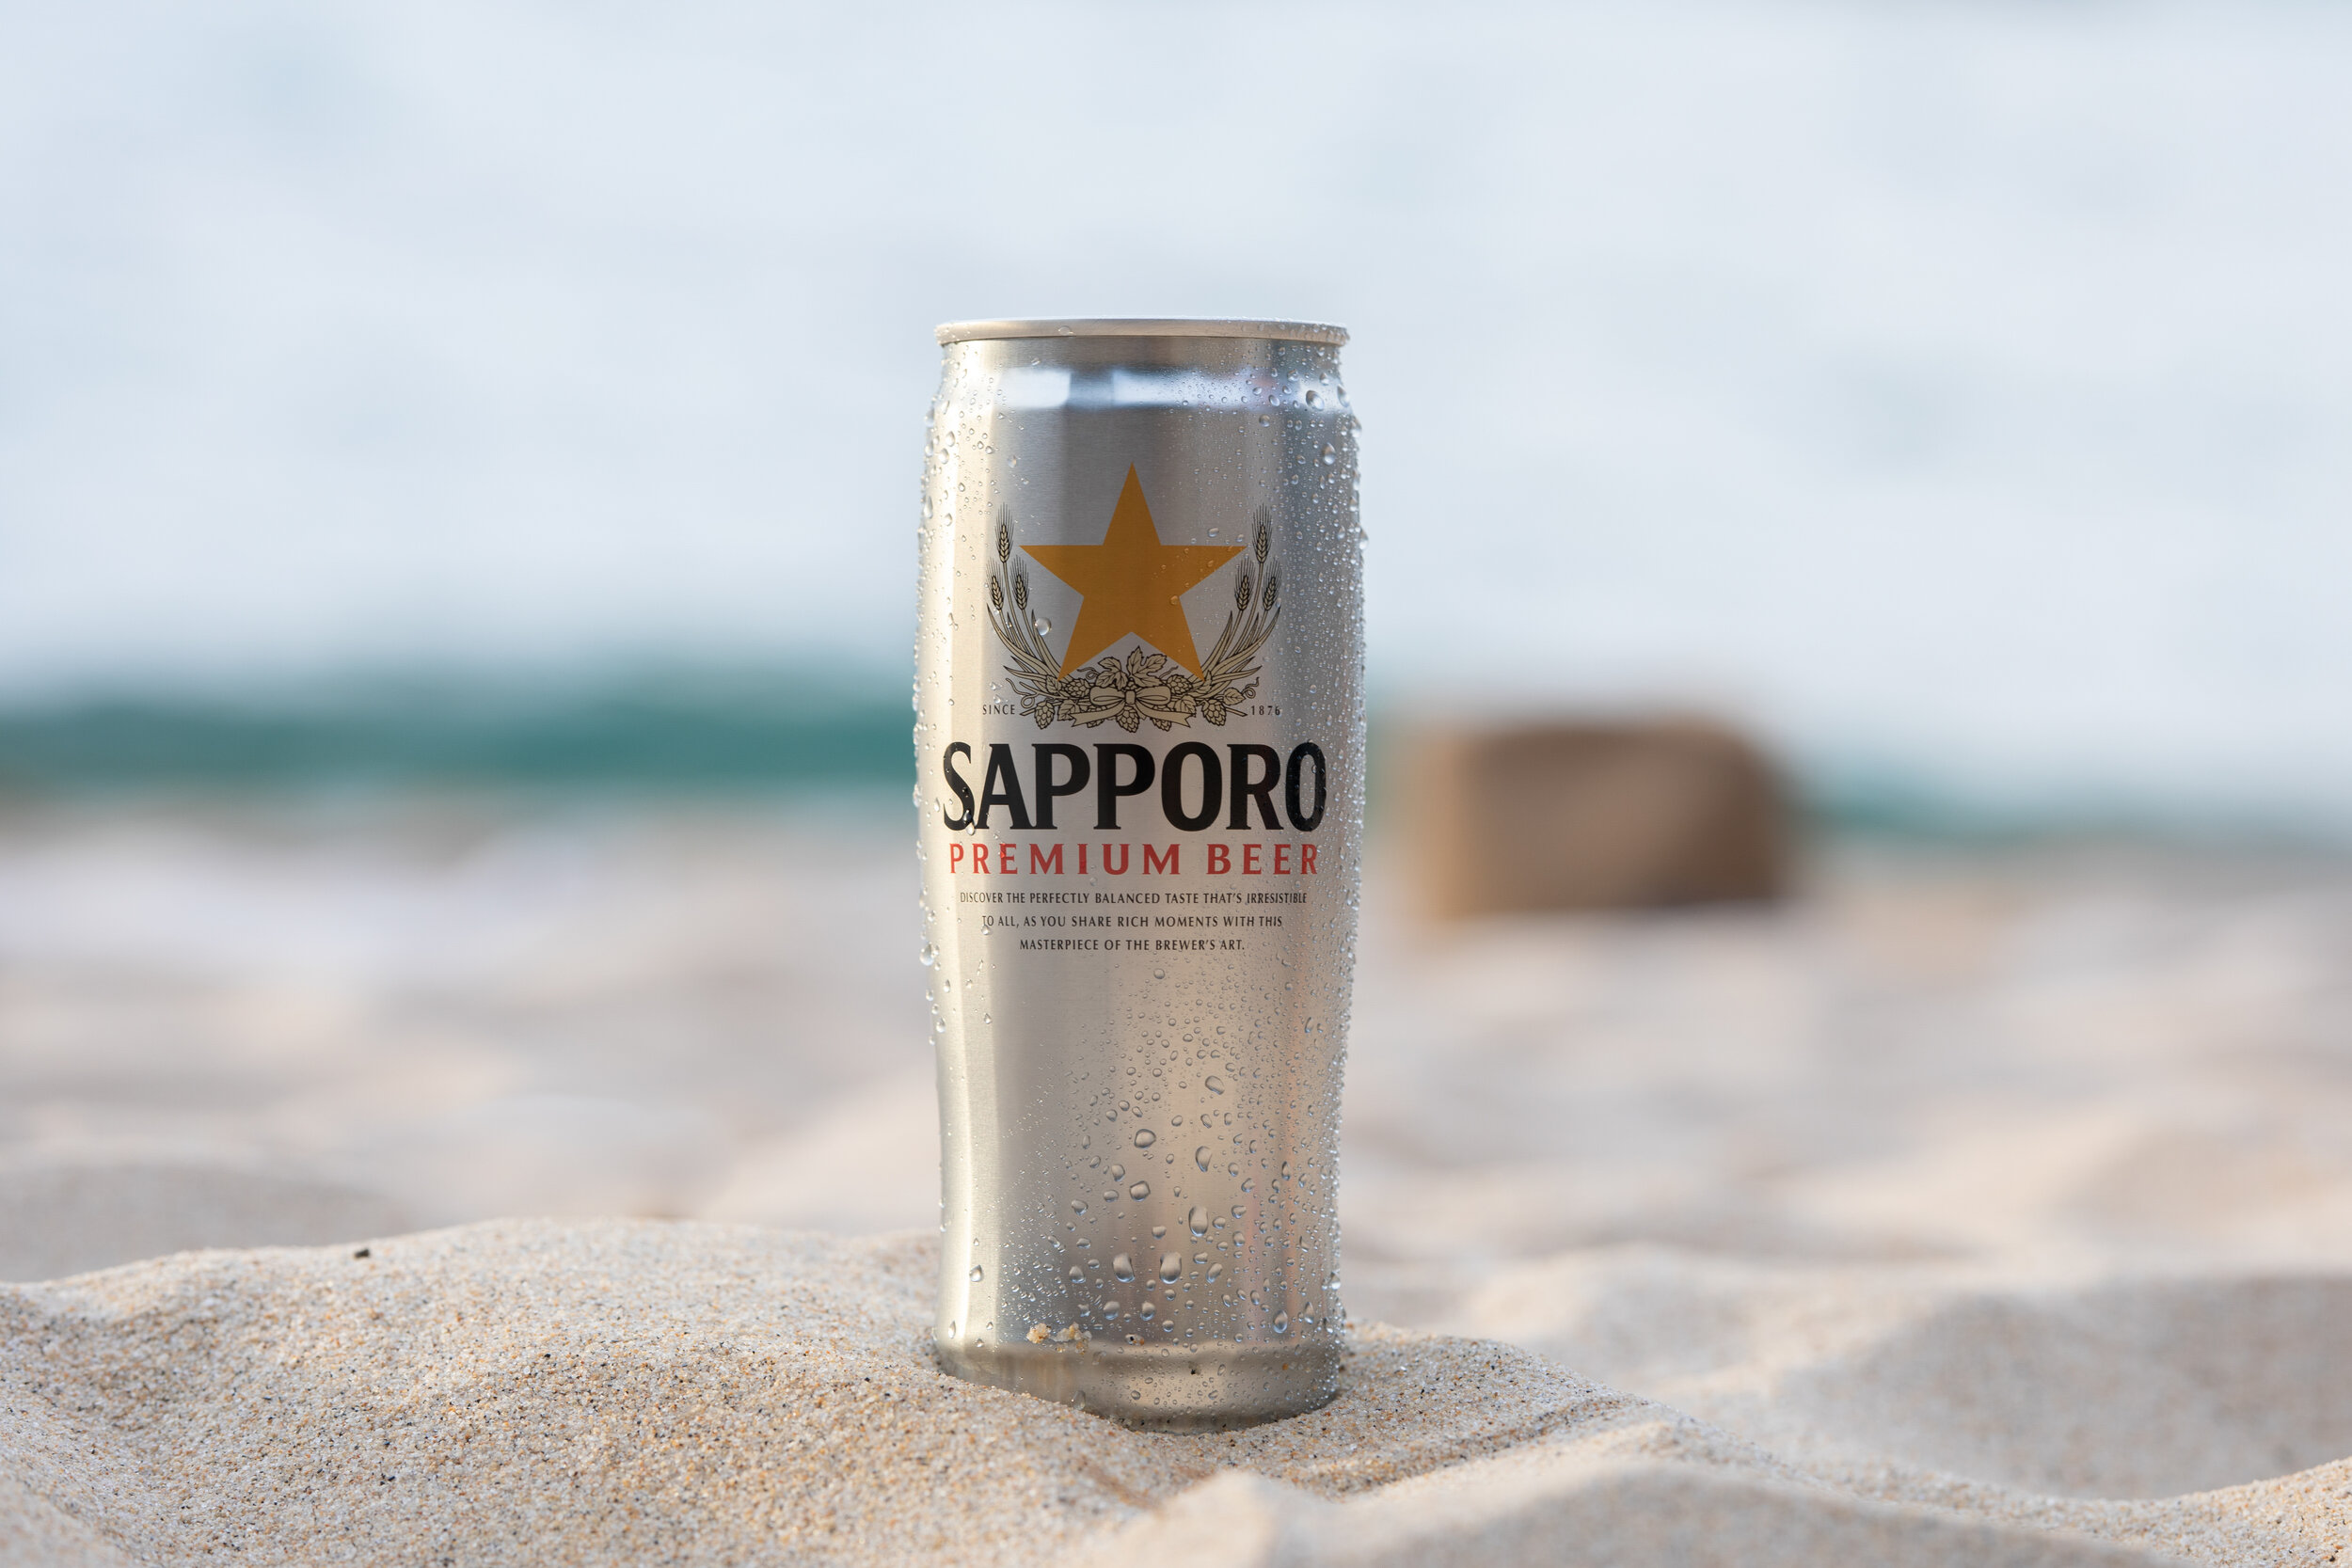 042321_Sapporo Beverage Brand Images_008.jpg